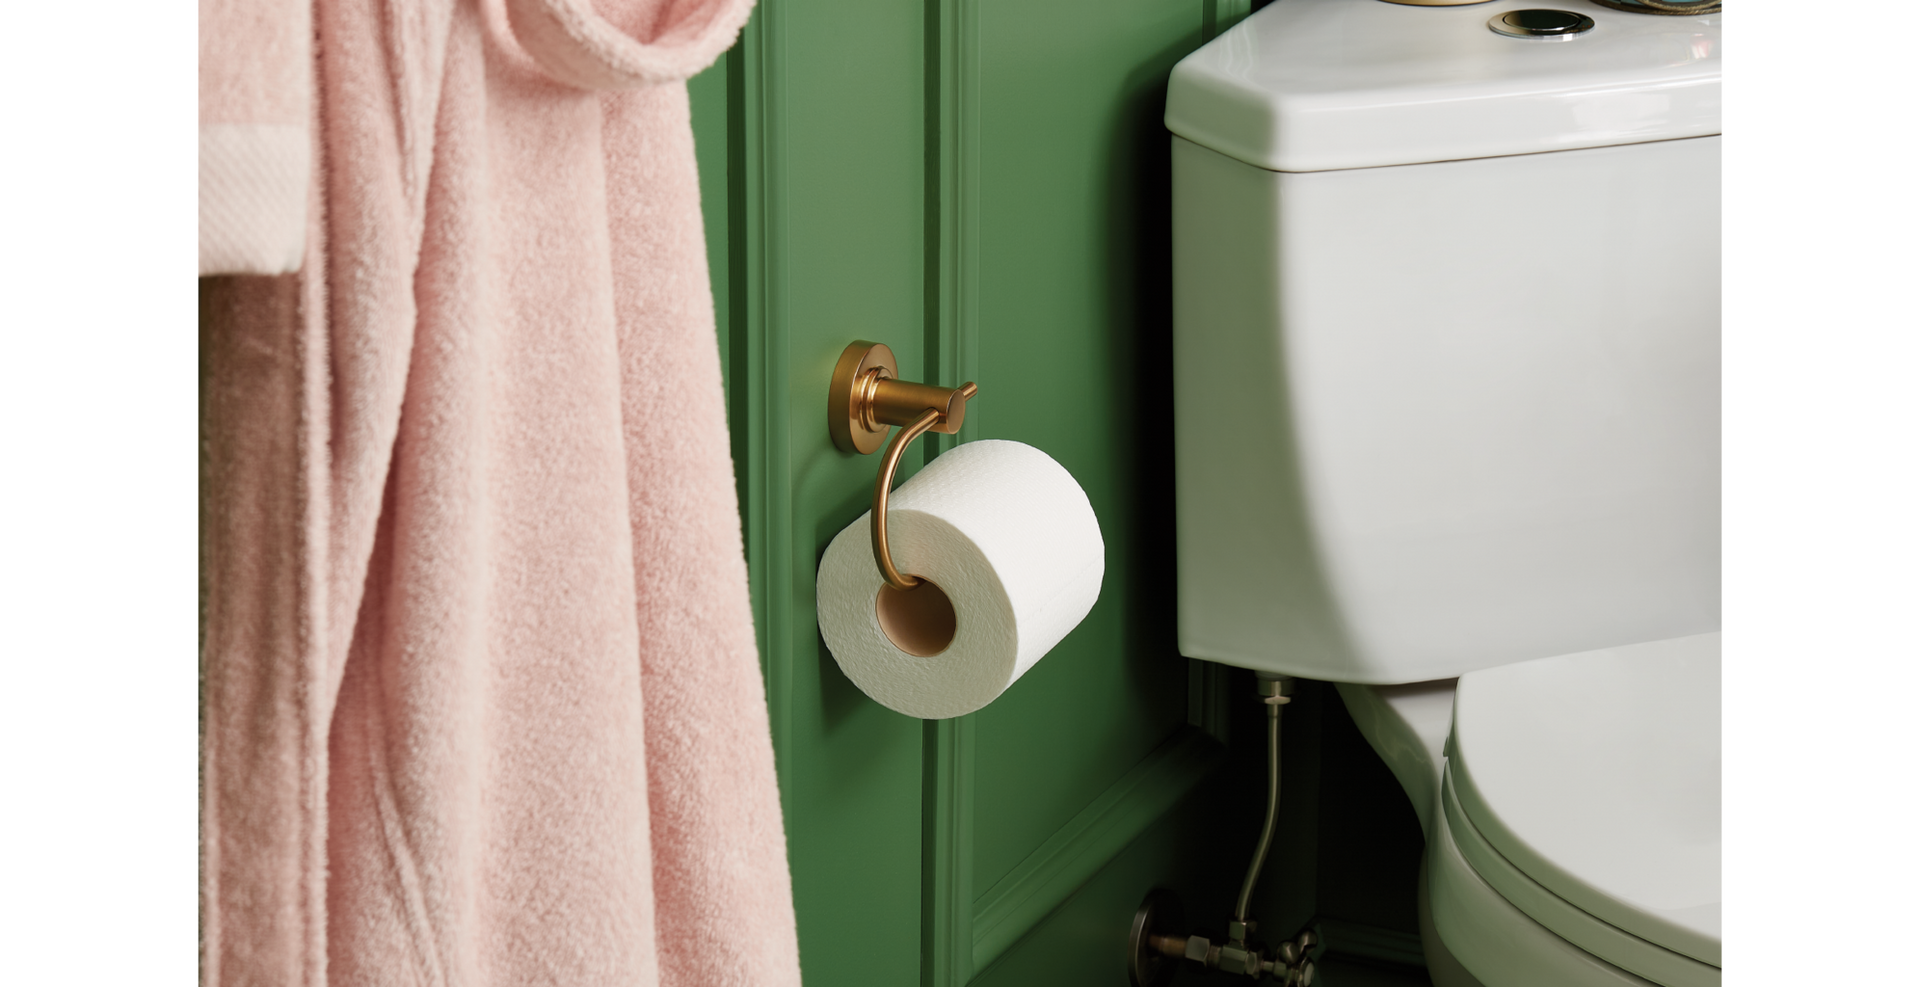 Modern Toilet Paper Holder, Free Standing Toilet Paper Stand With Shelf,  Metal Toilet Paper Roll Holder 